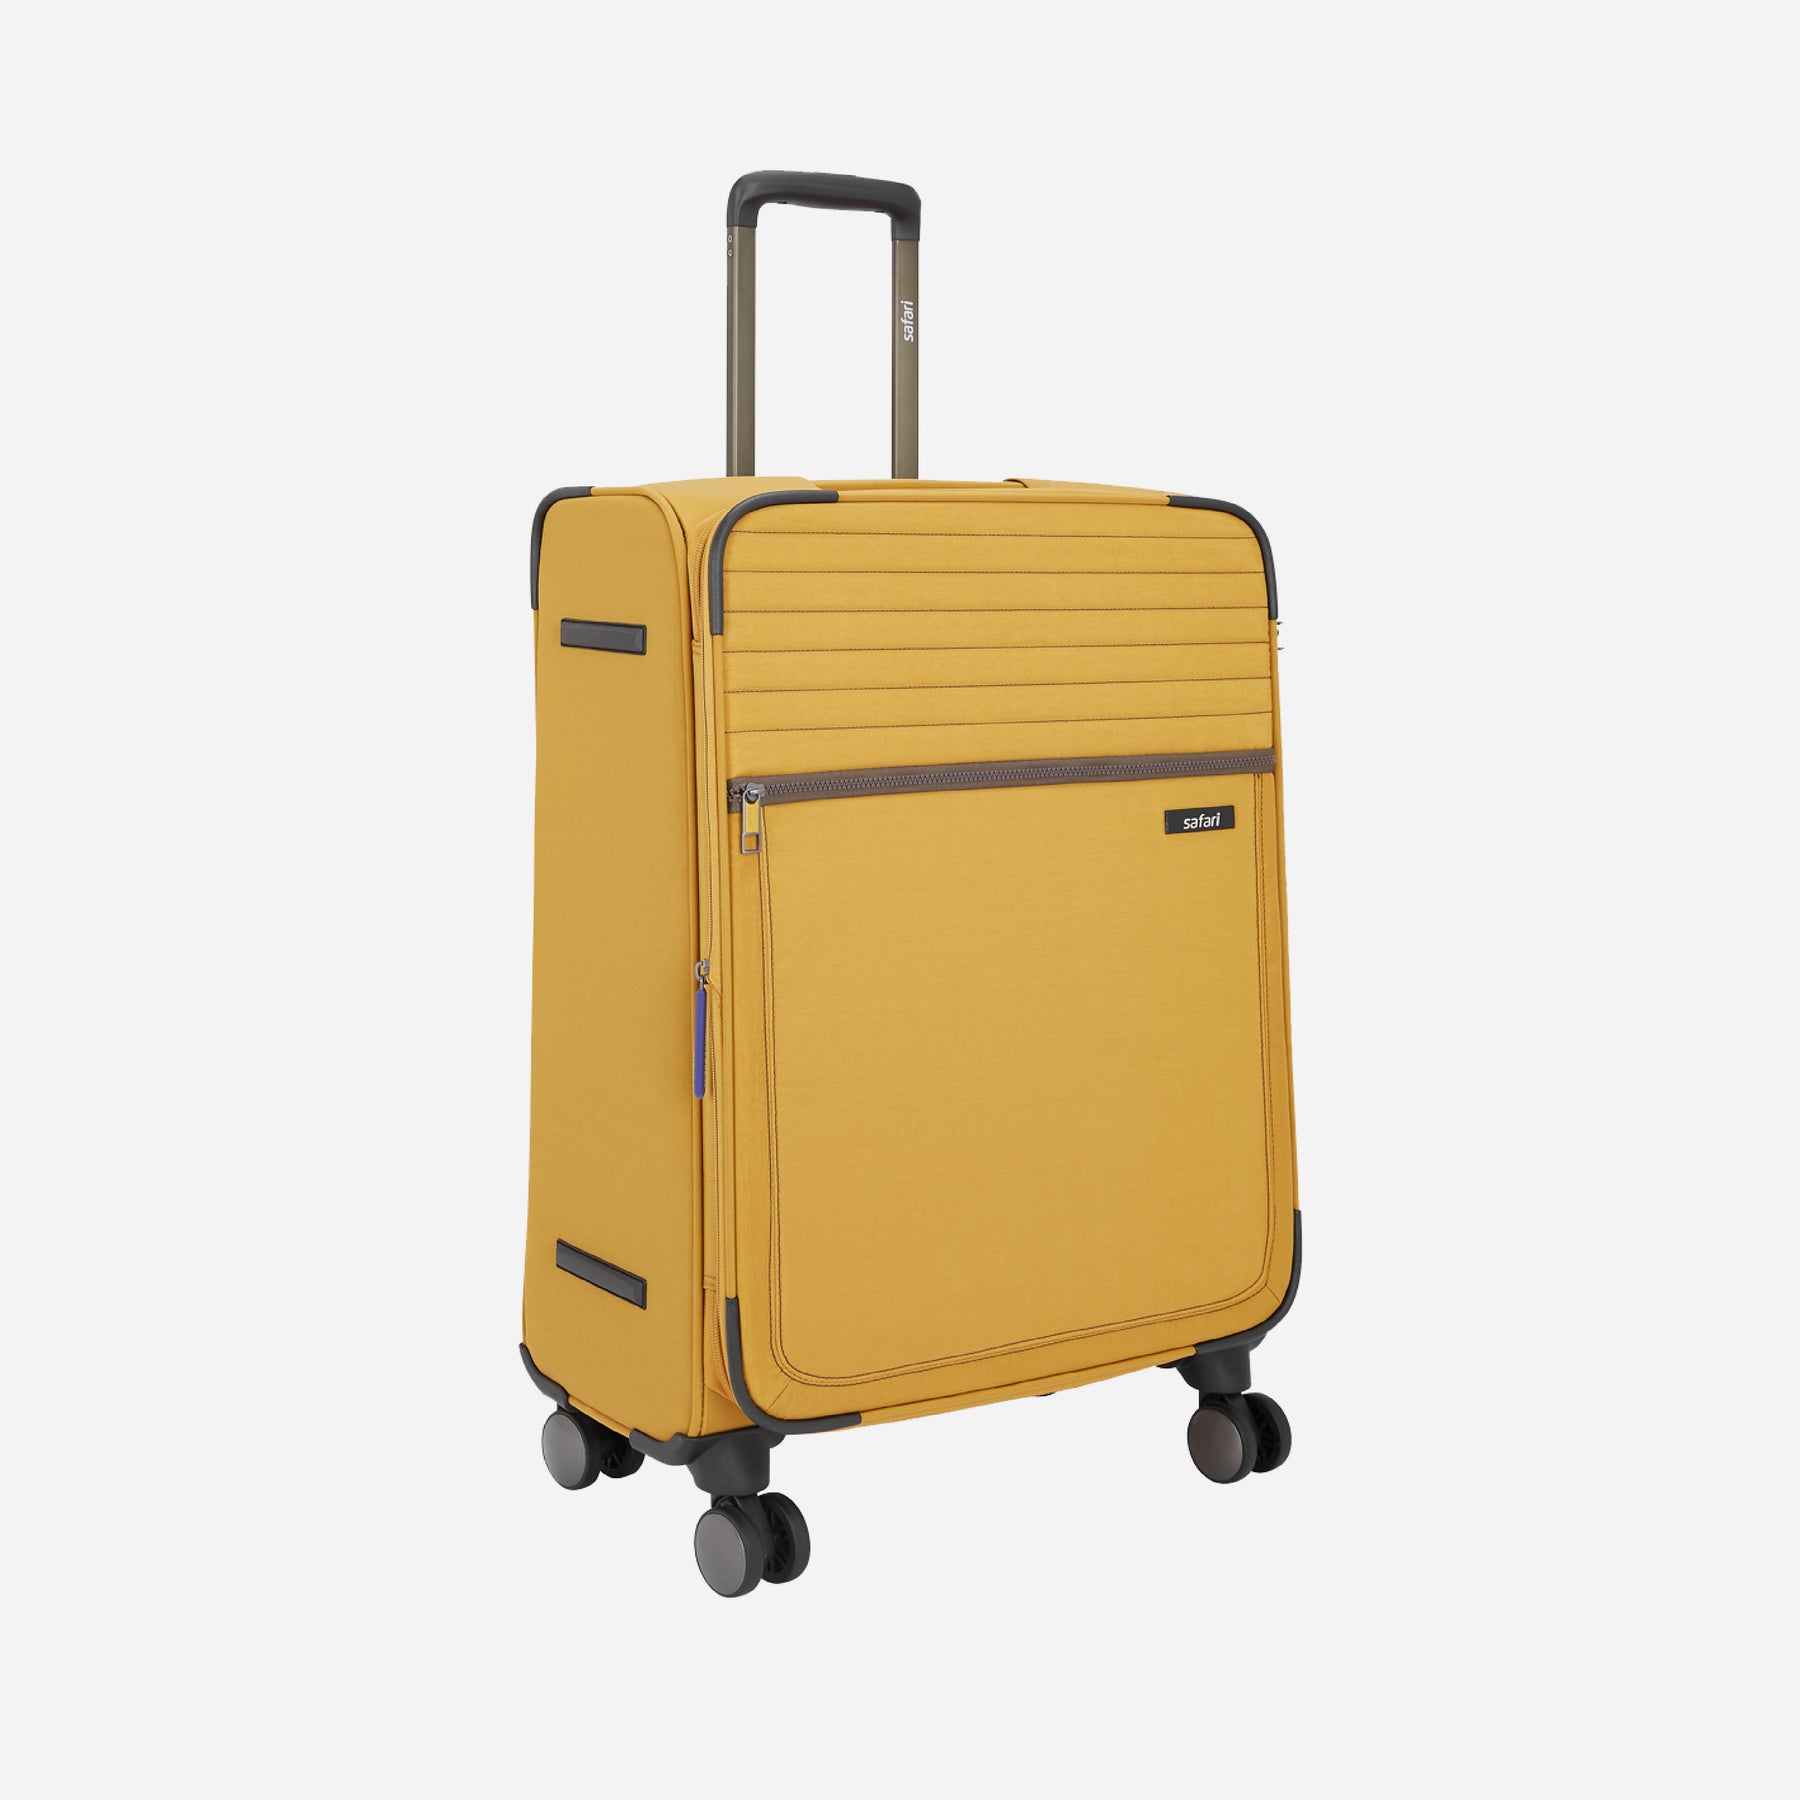 Duvet Anti Theft Soft Luggage with Premium Fabric, TSA lock, Securi Zipper and Dual Wheels - Yellow